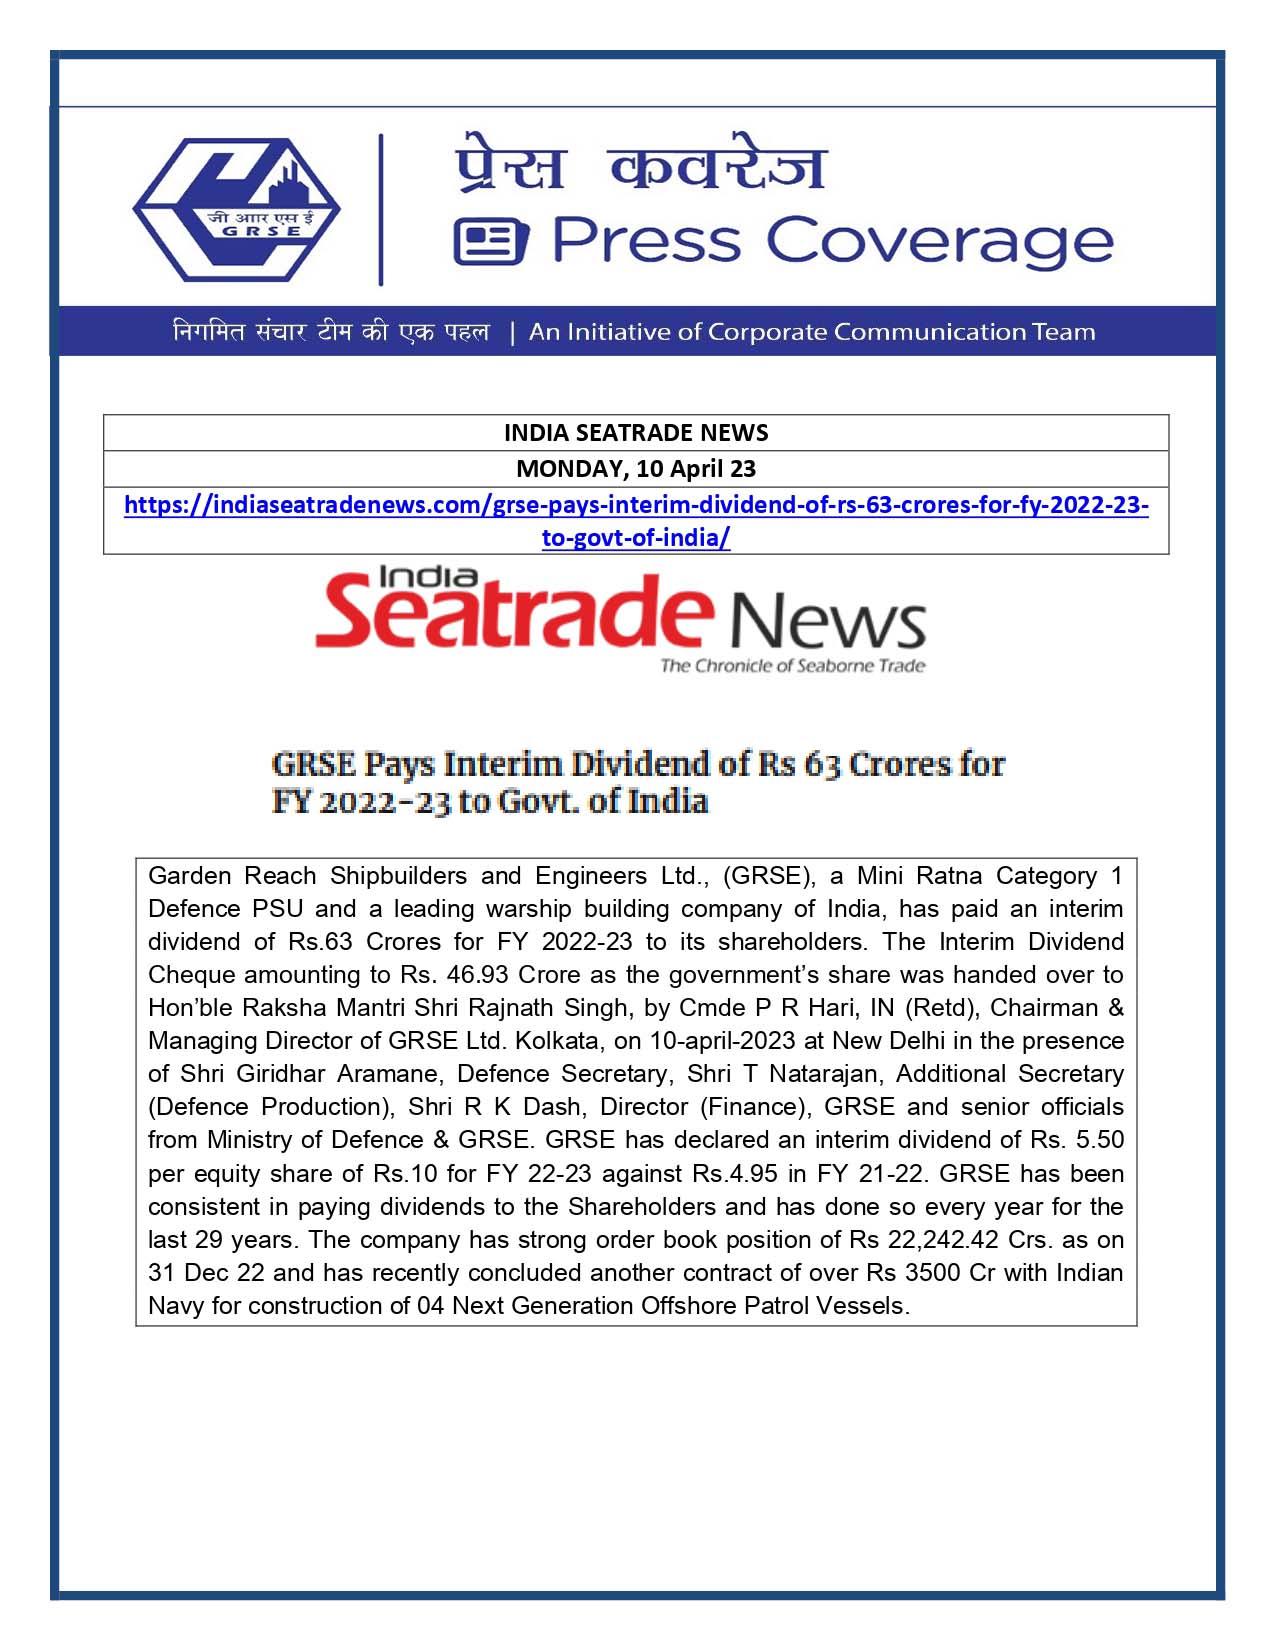 India Seatrade News 10 Apr 23